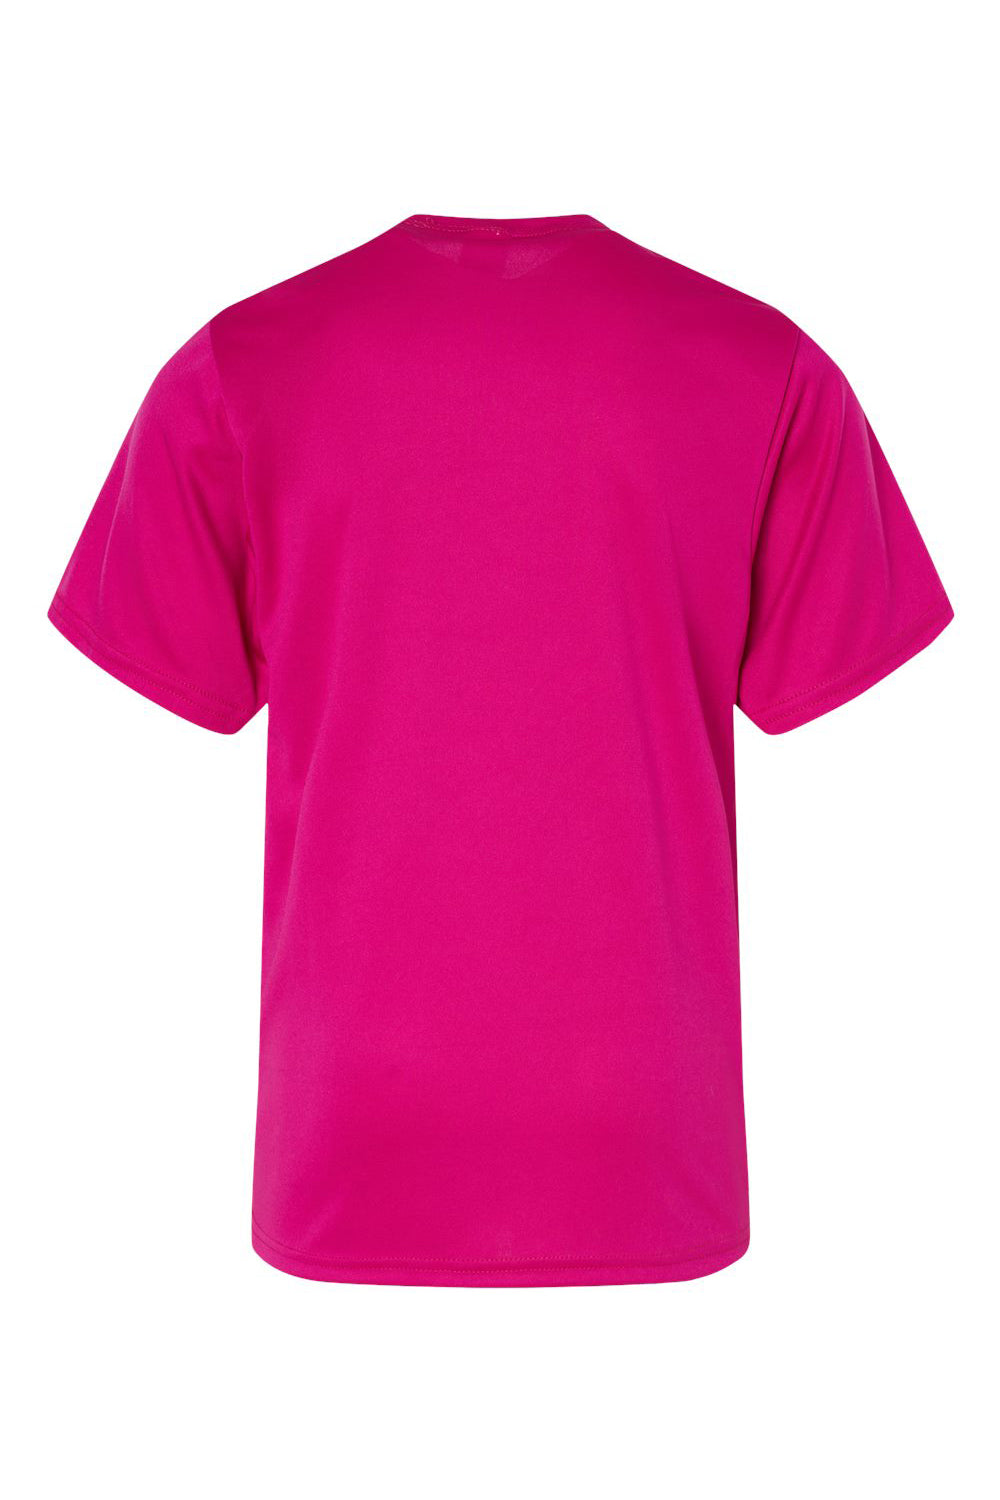 C2 Sport 5200 Youth Performance Moisture Wicking Short Sleeve Crewneck T-Shirt Hot Pink Flat Back